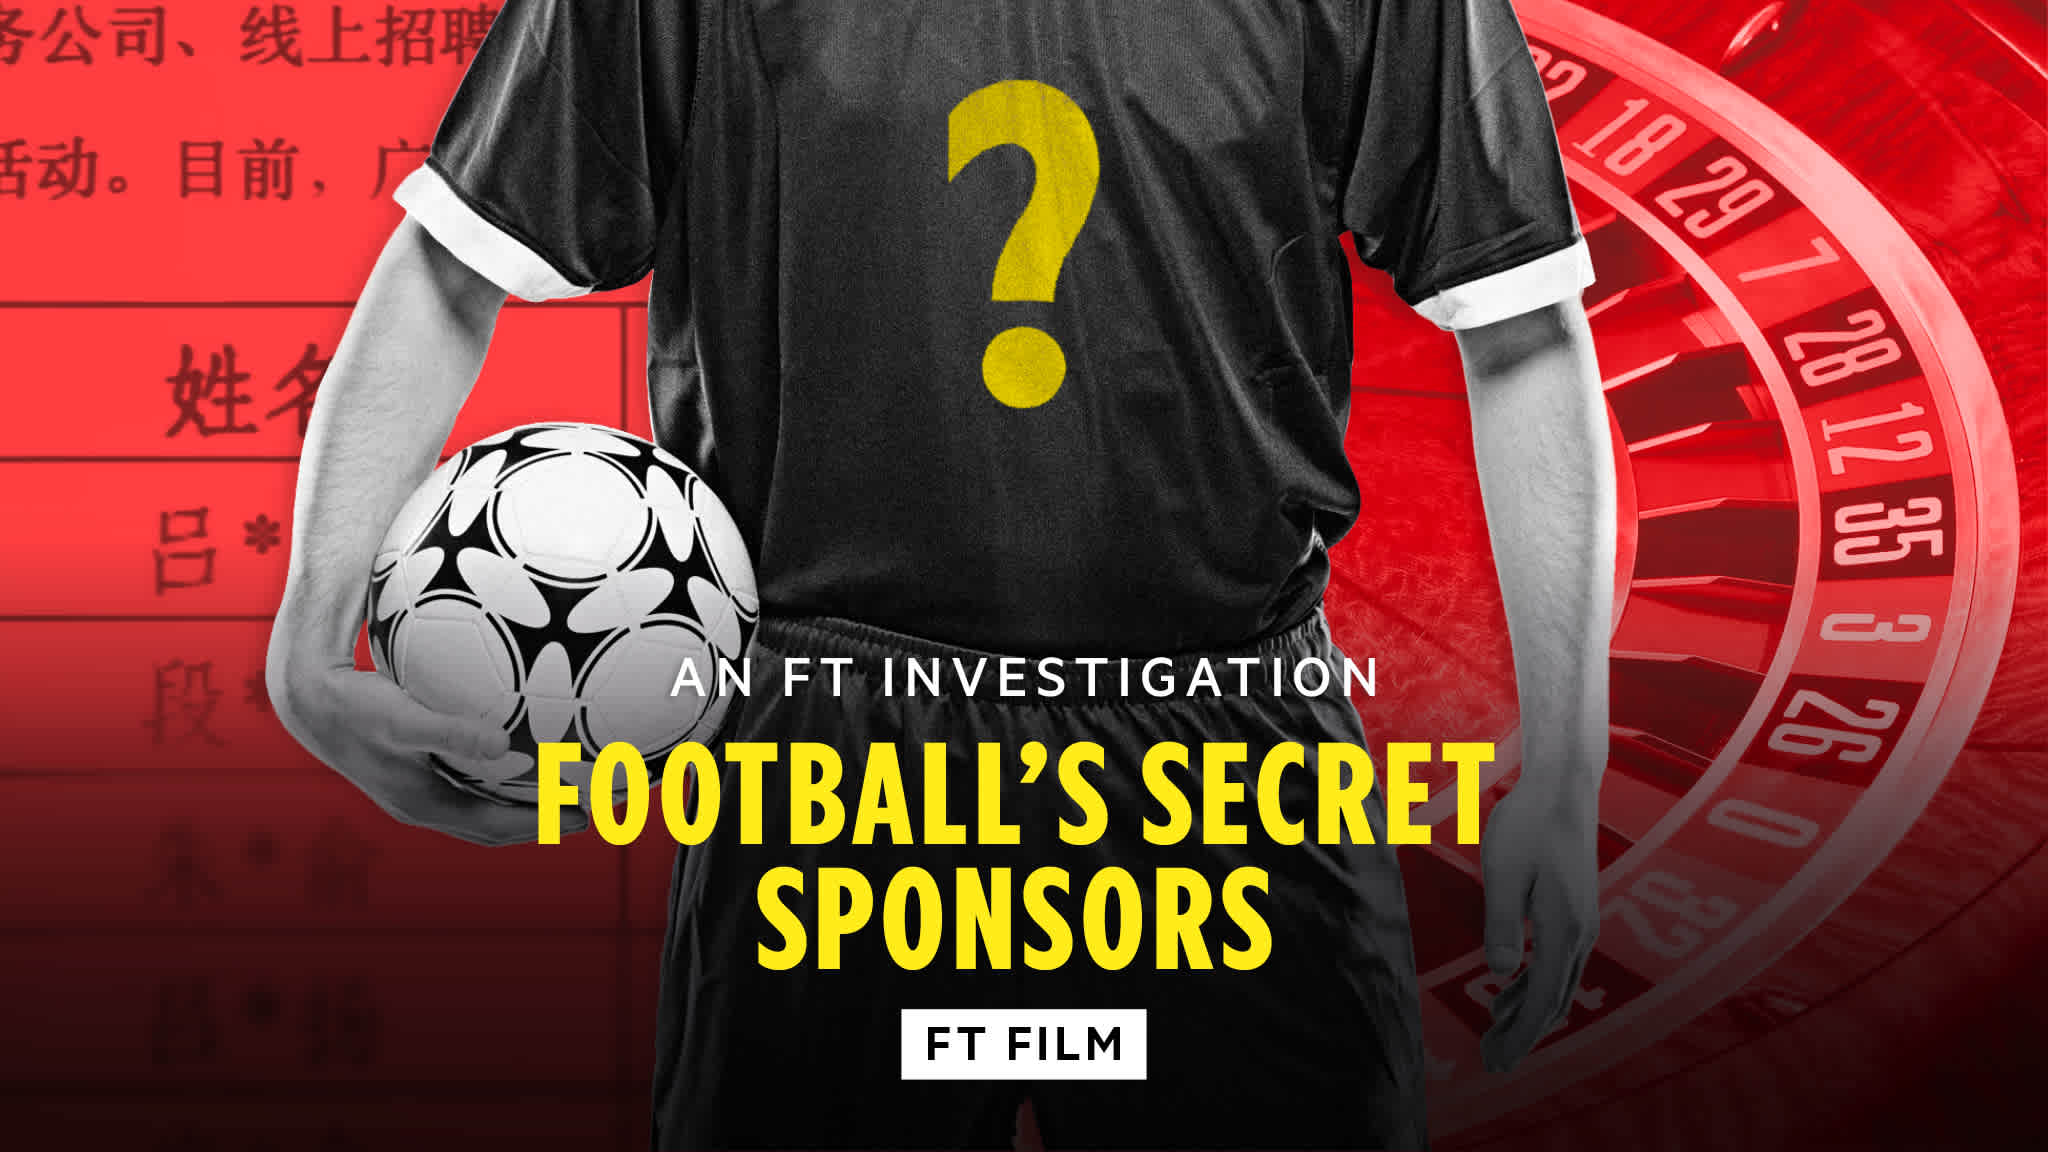 An FT Investigation Football's Secret Sponsors